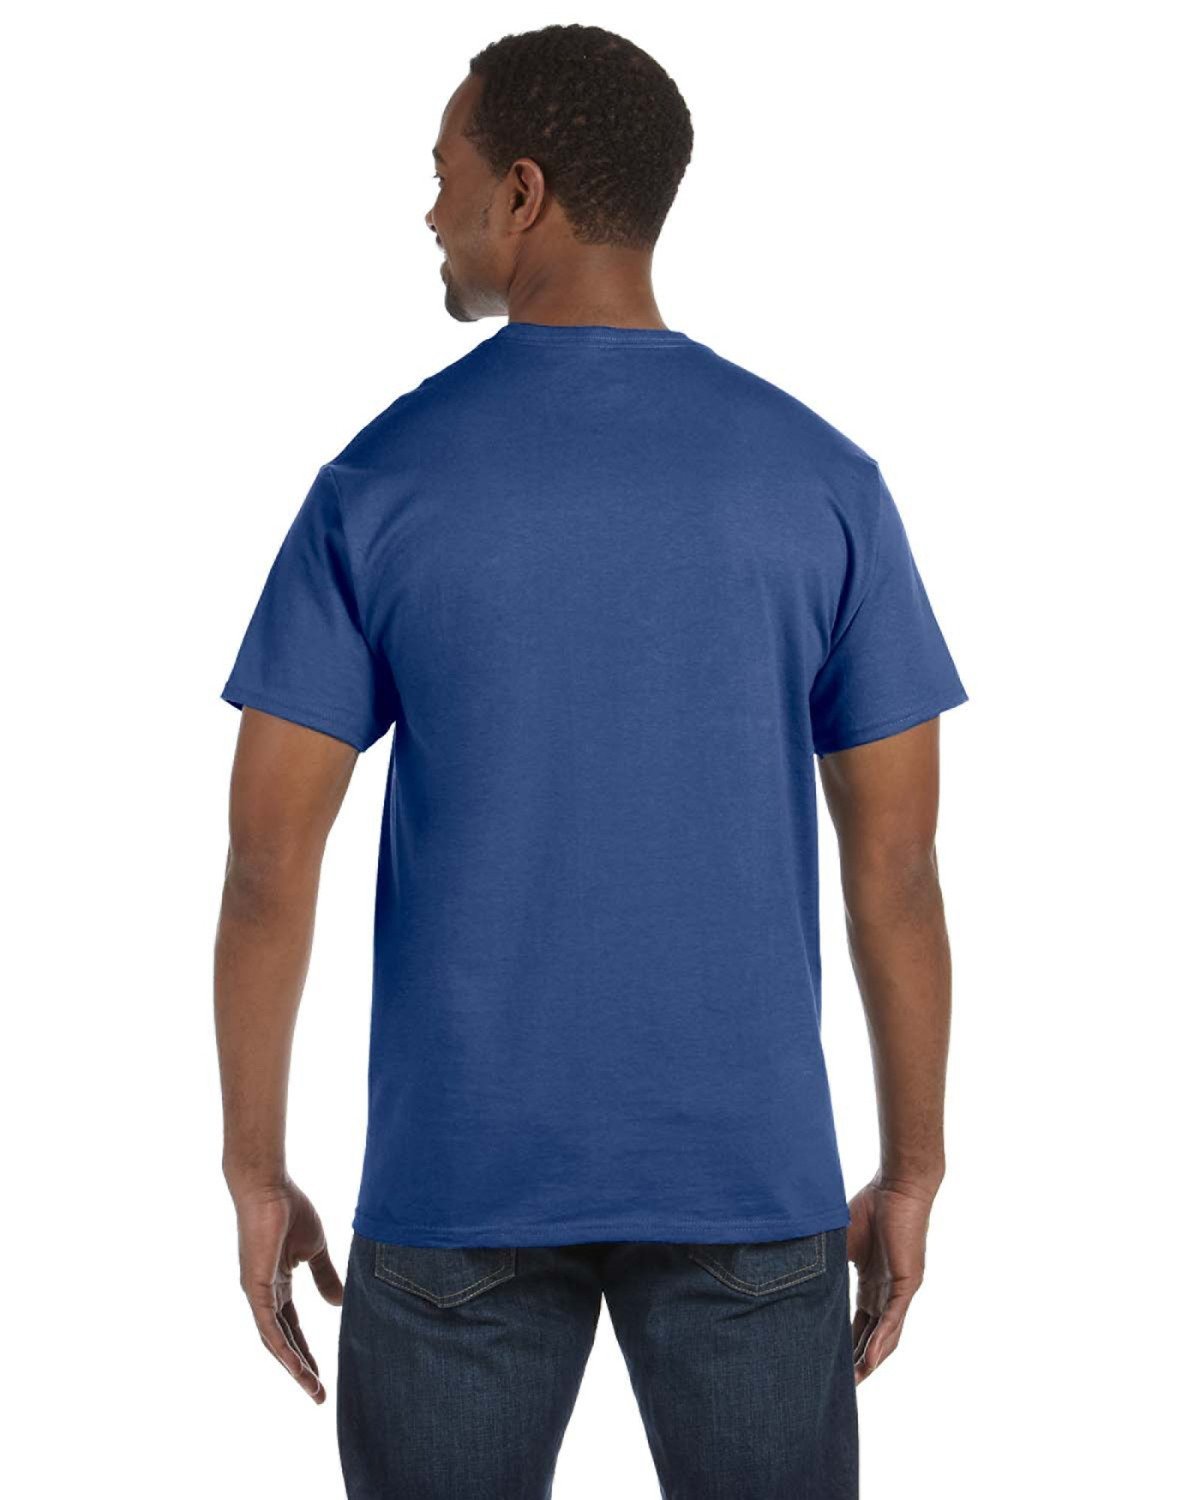 29M-Jerzees-VINTAGE HTH BLUE-Jerzees-T-Shirts-2